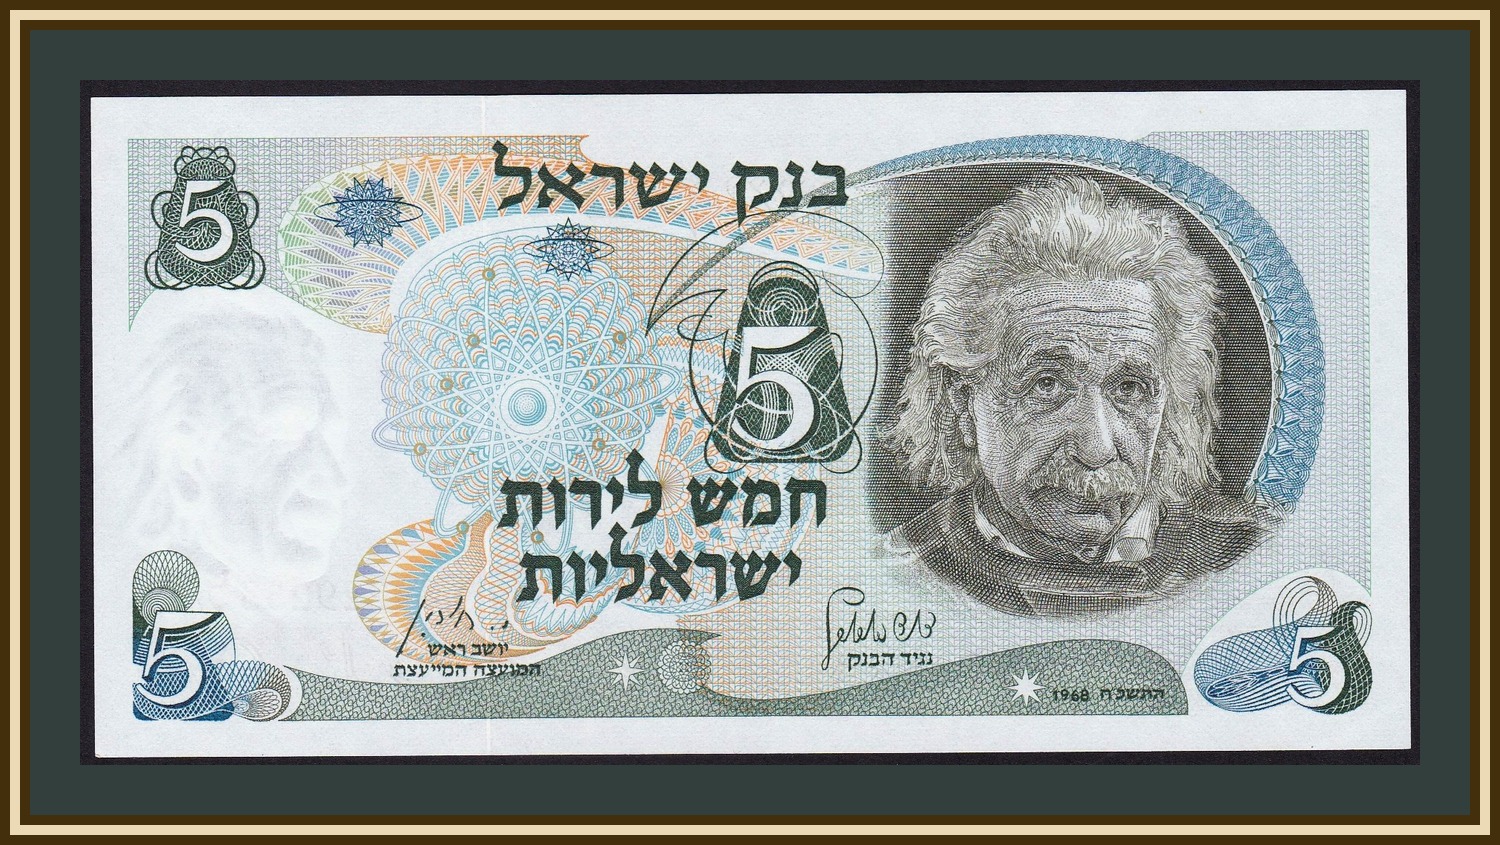 10 shekels and a shirt